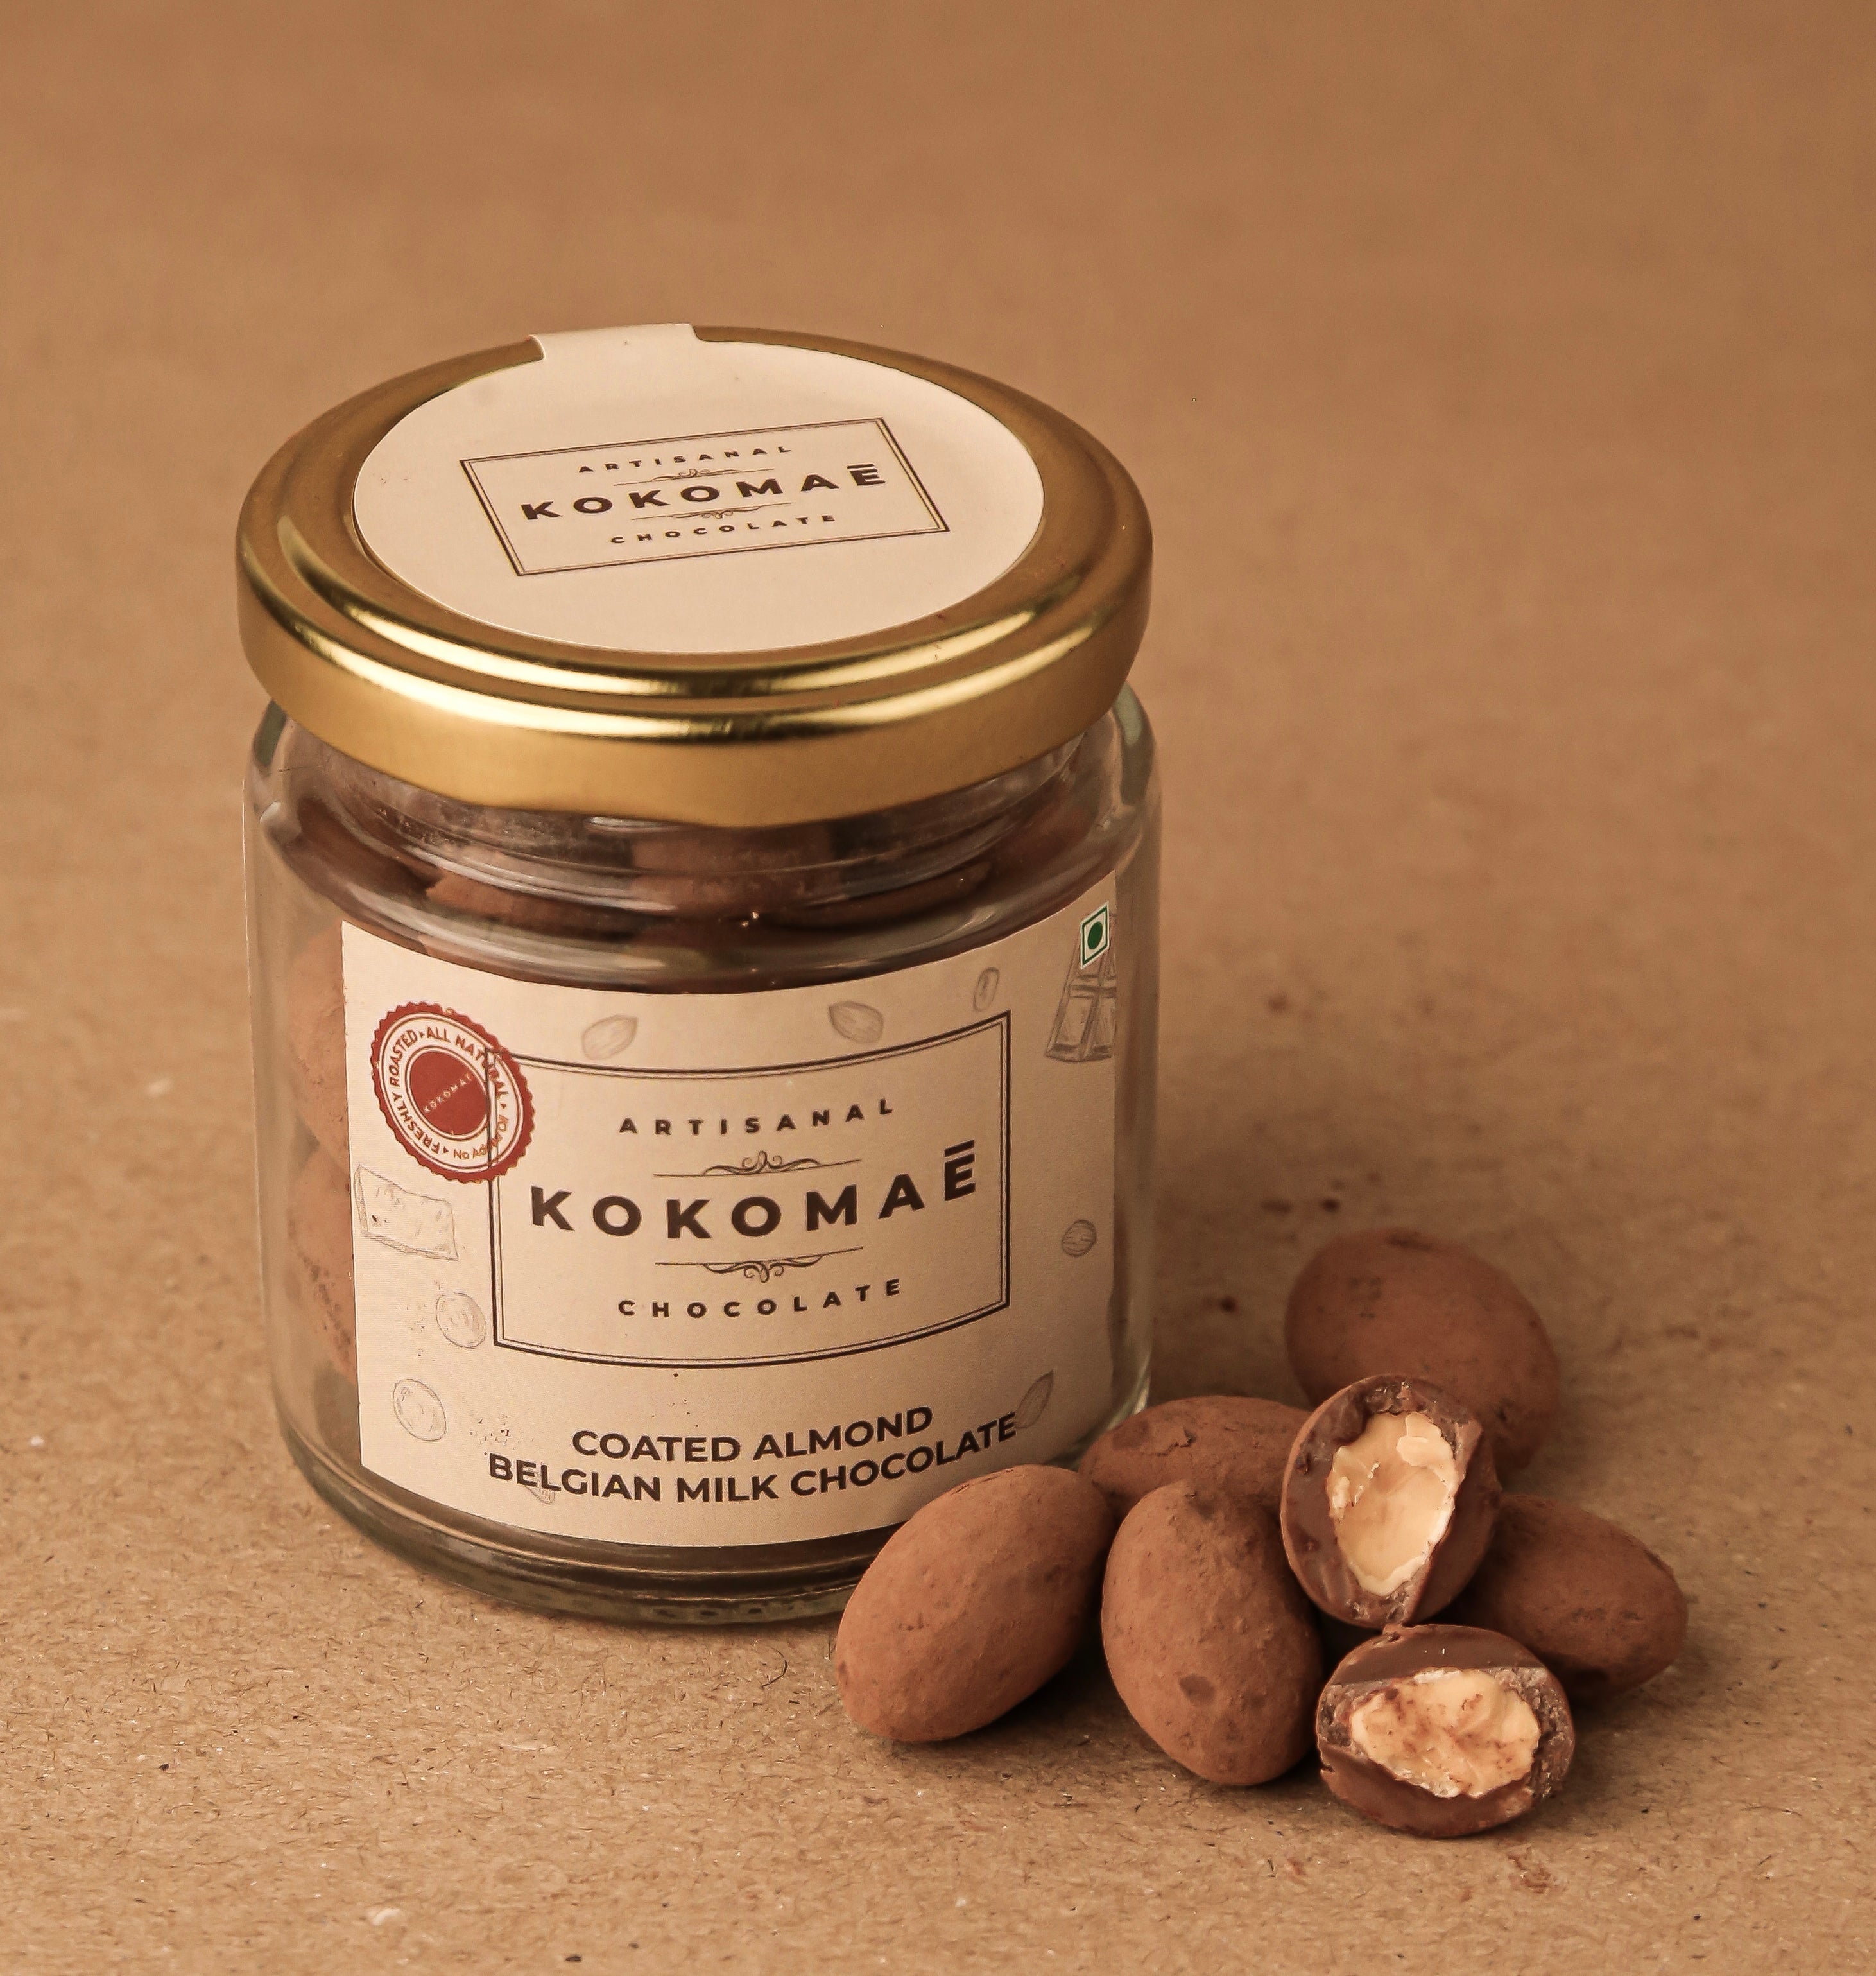 Kokomaē Gift Hamper with 6 Jars of Coated Nuts